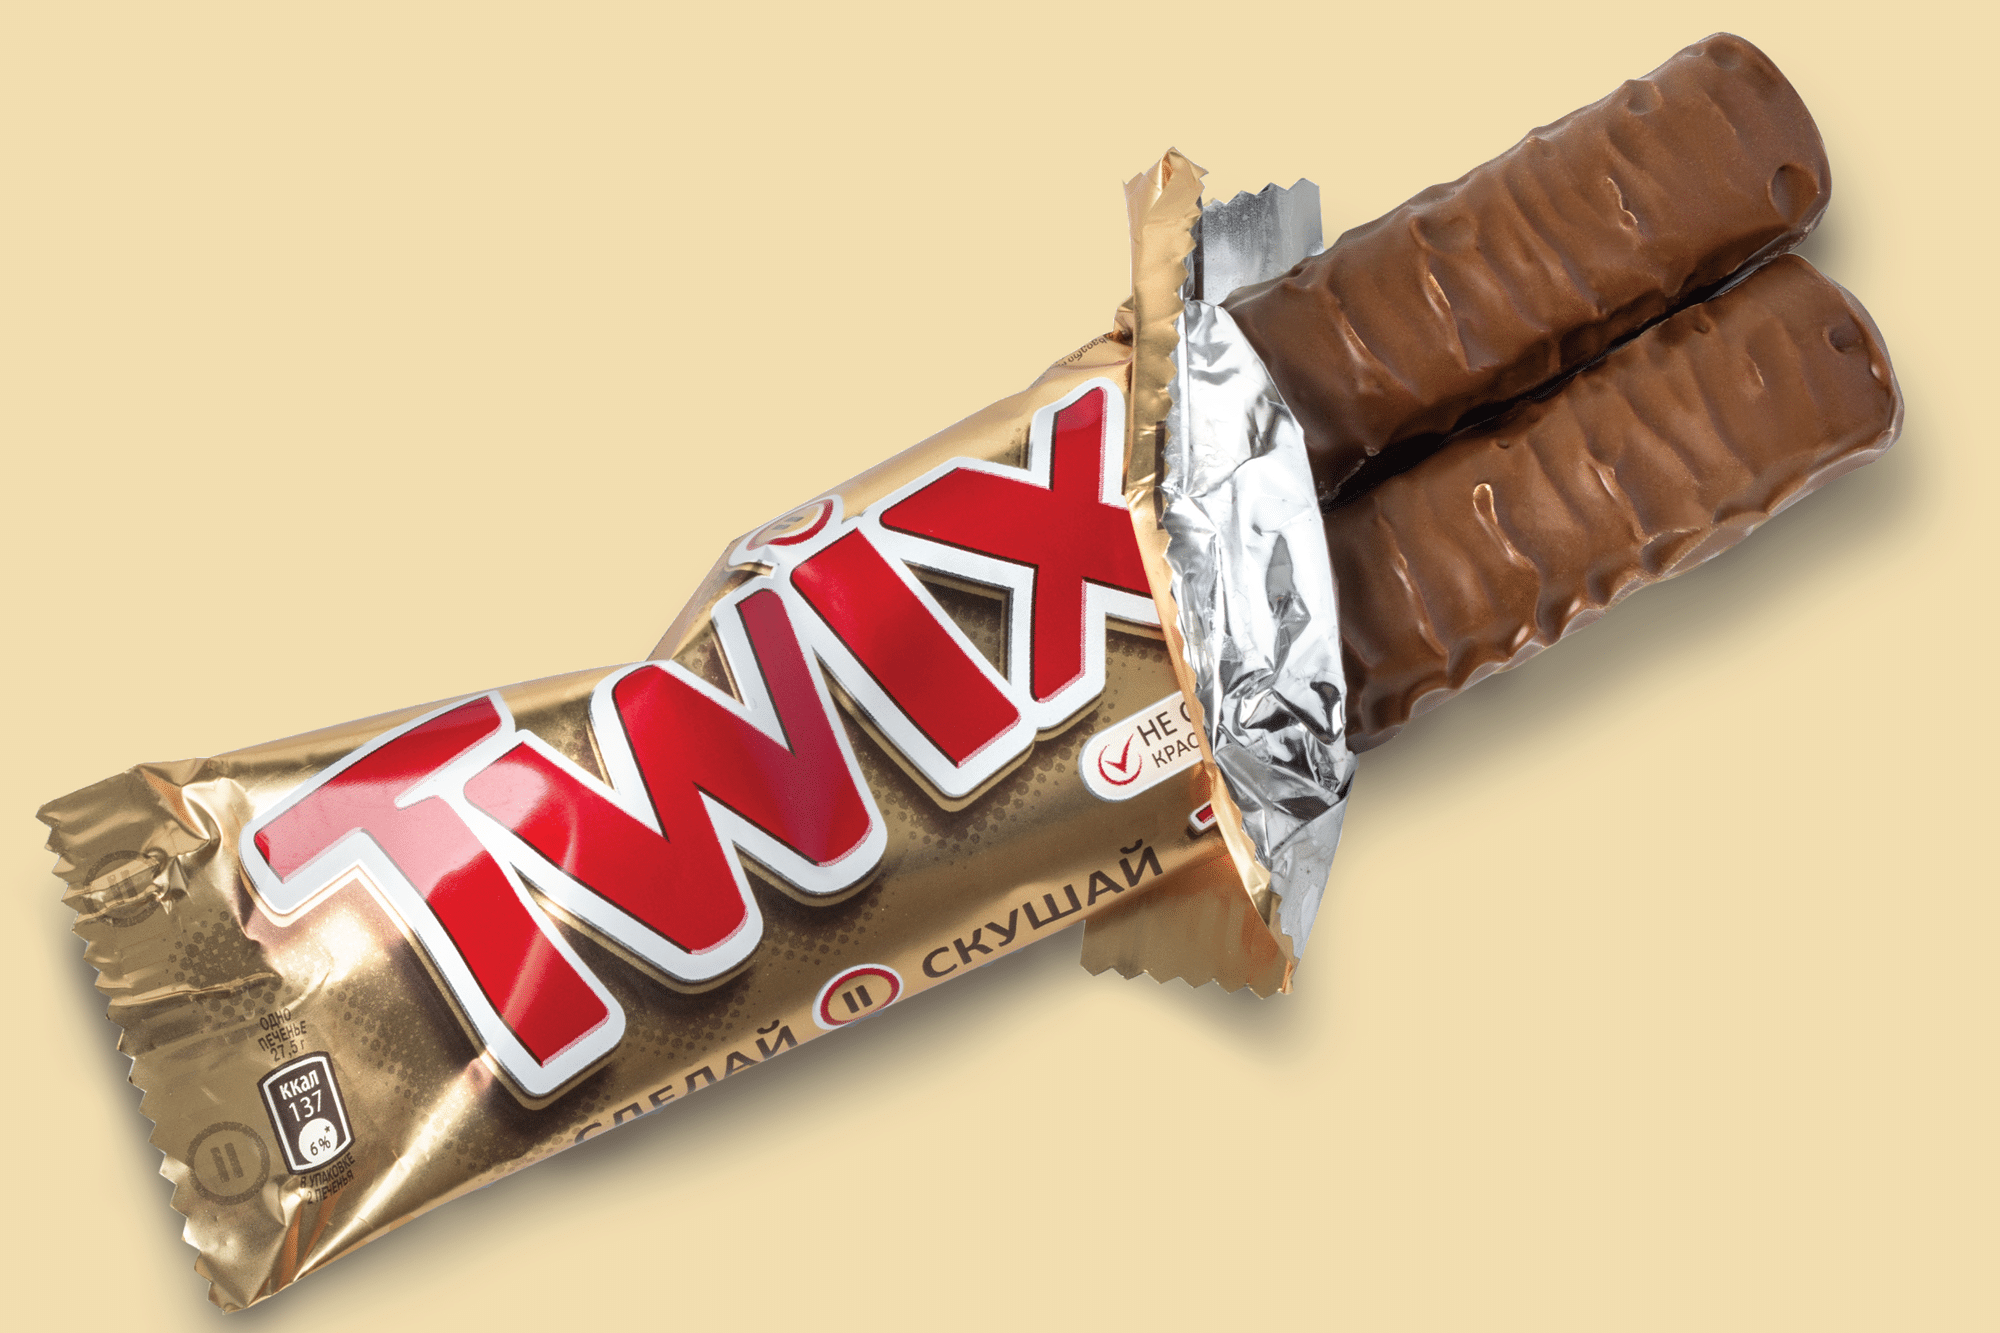 Twix chocolate bar on a beige background.